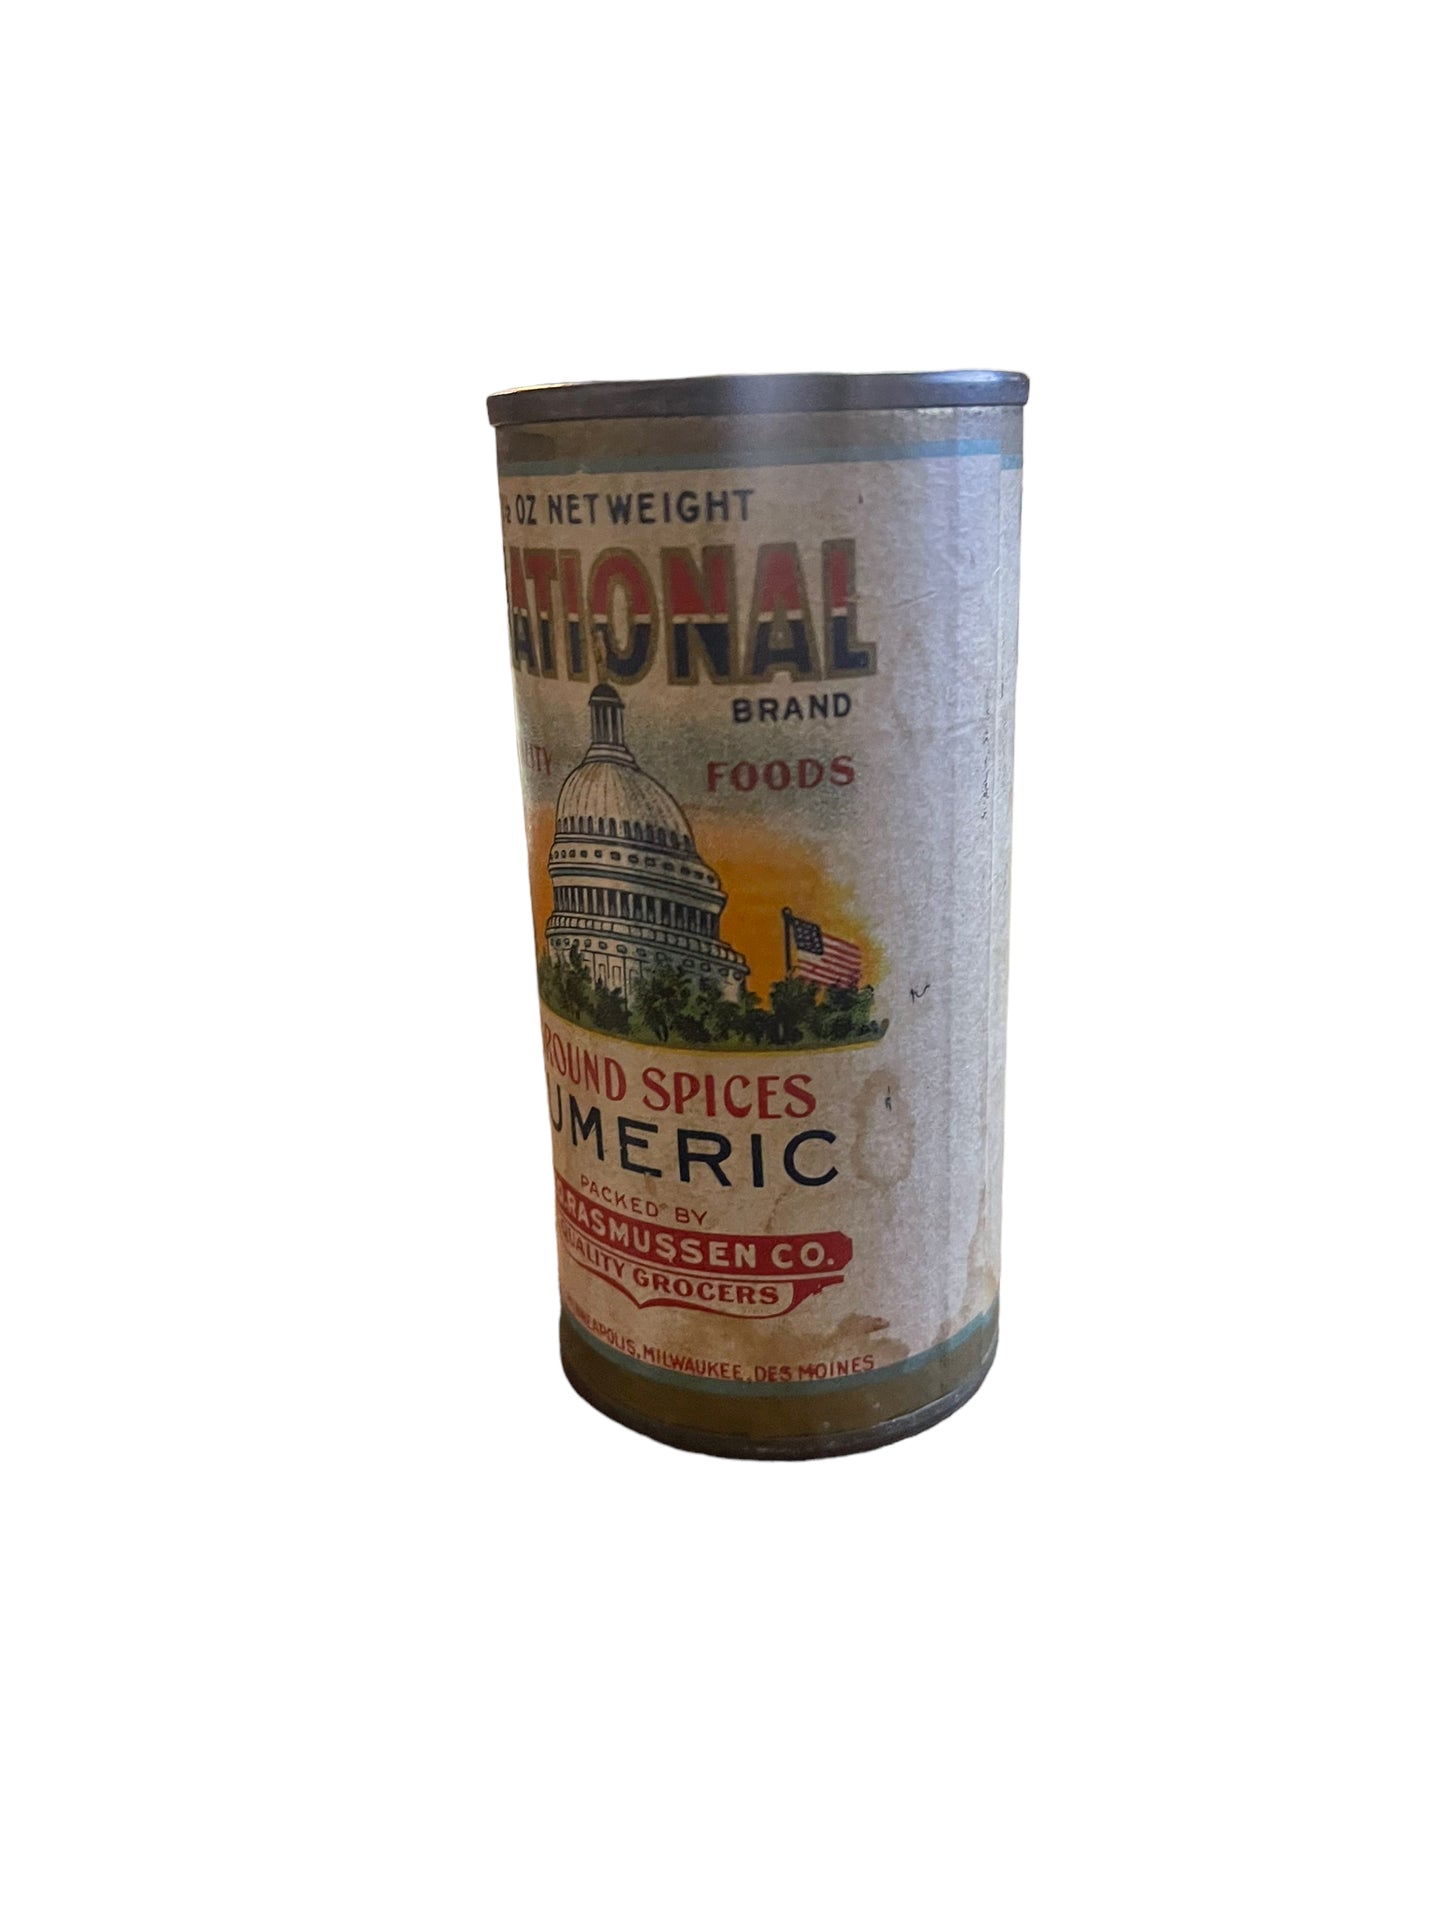 Vintage National Tumeric Spice Round Tin Geo Rasmussen Co. Chicago Des Moines